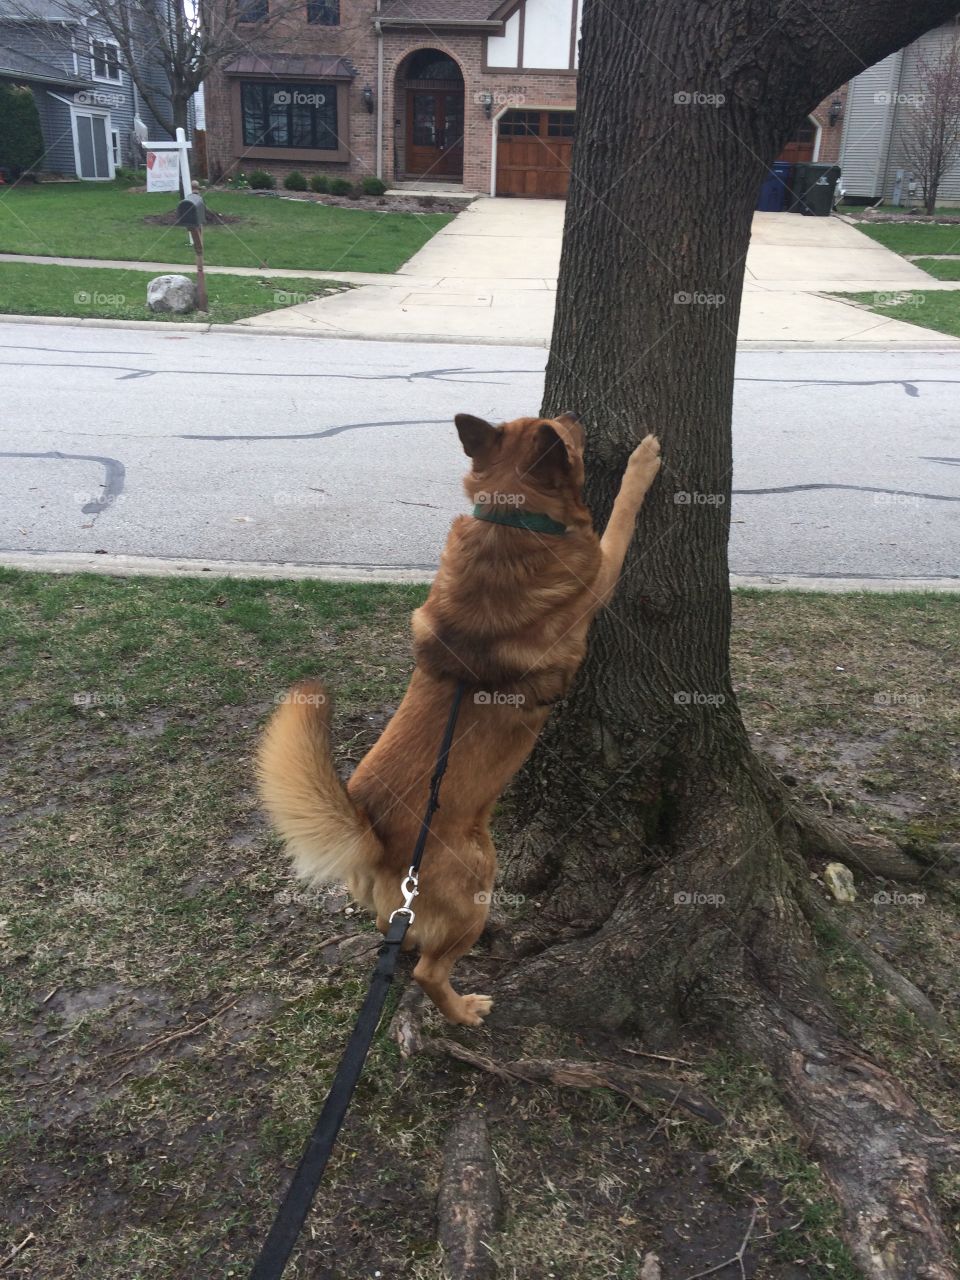 Chasing that squirrel 